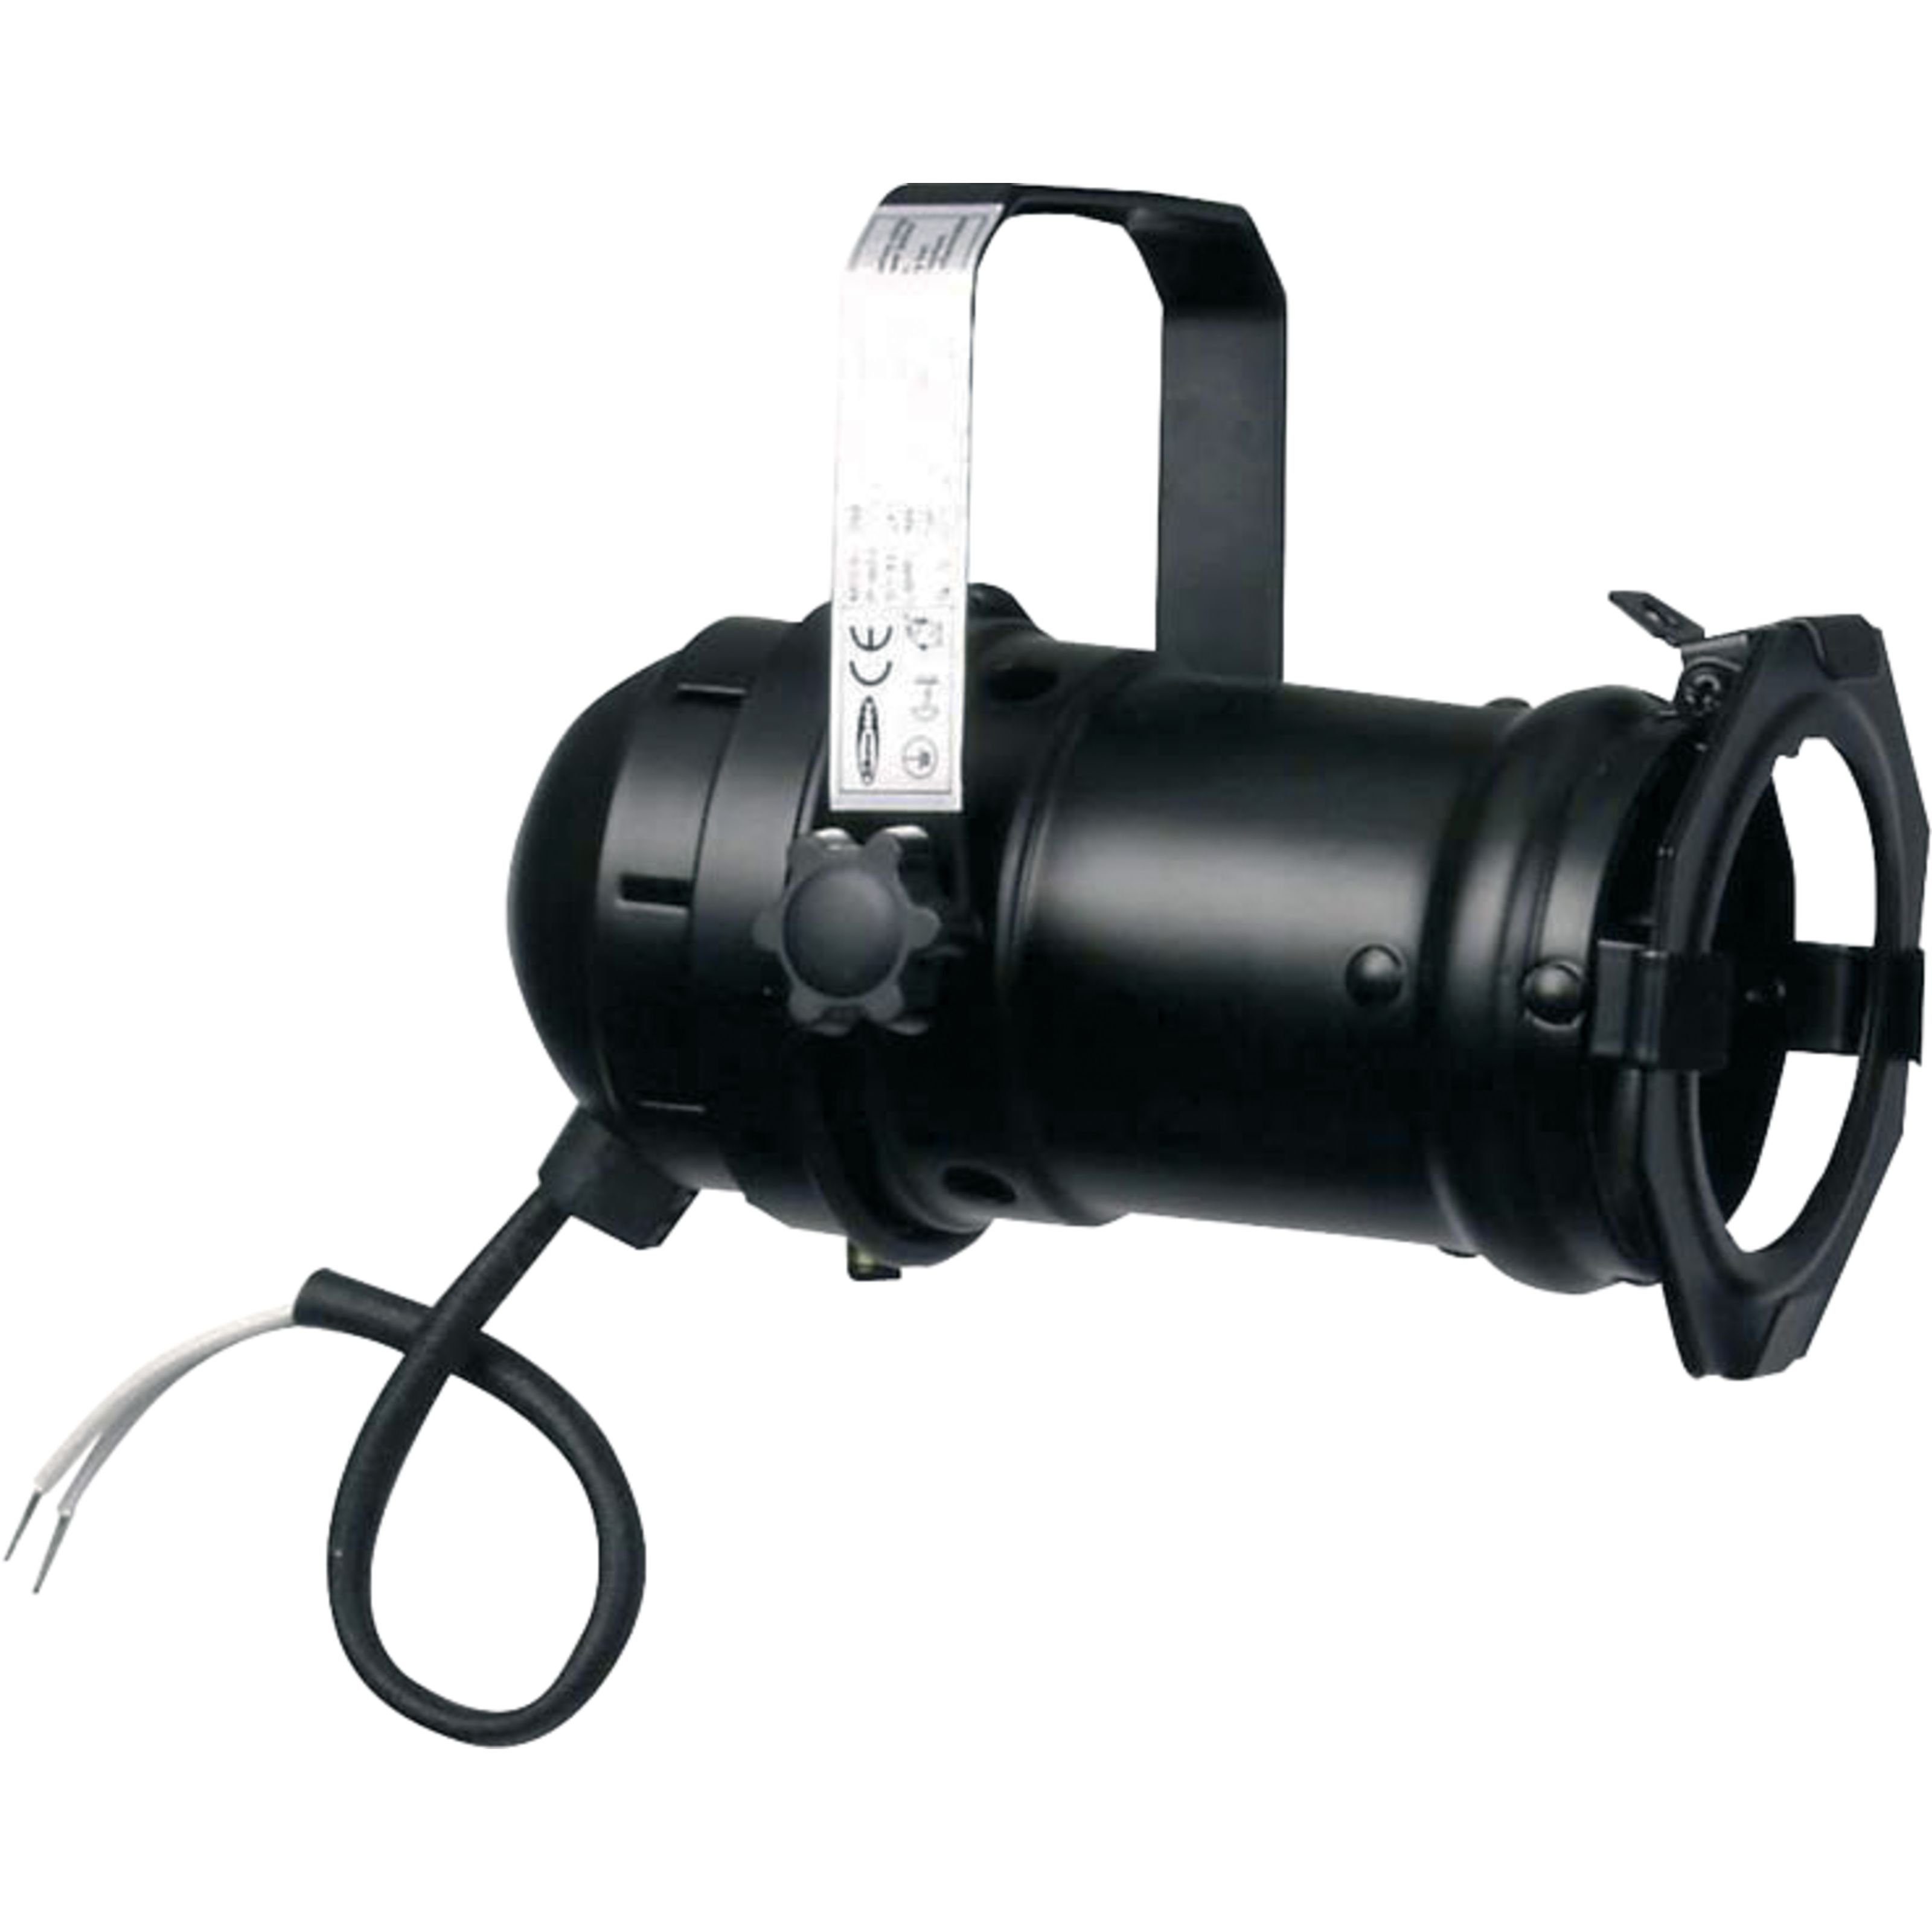 MR-16 Spot LED PAR-16 - Discolicht, black PAR EUROLITE Scheinwerfer